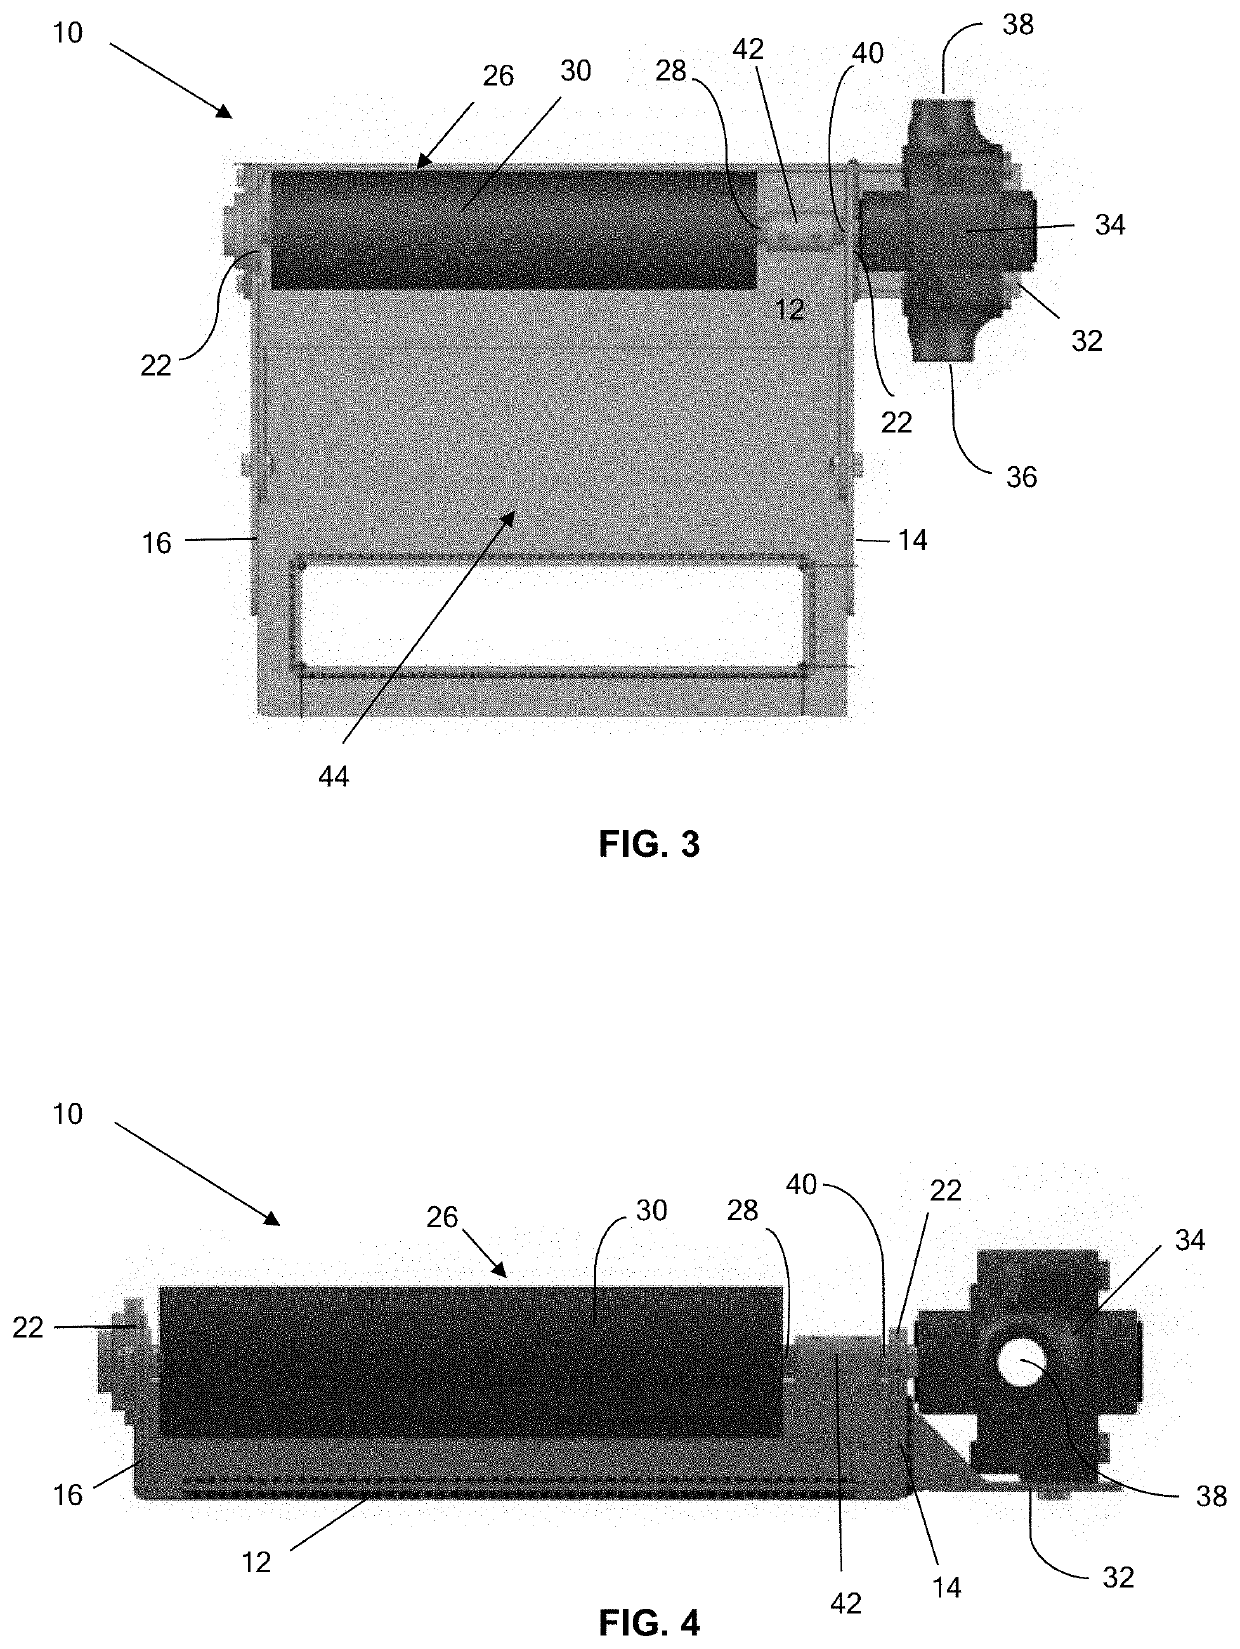 Aquacycle pump and method of use